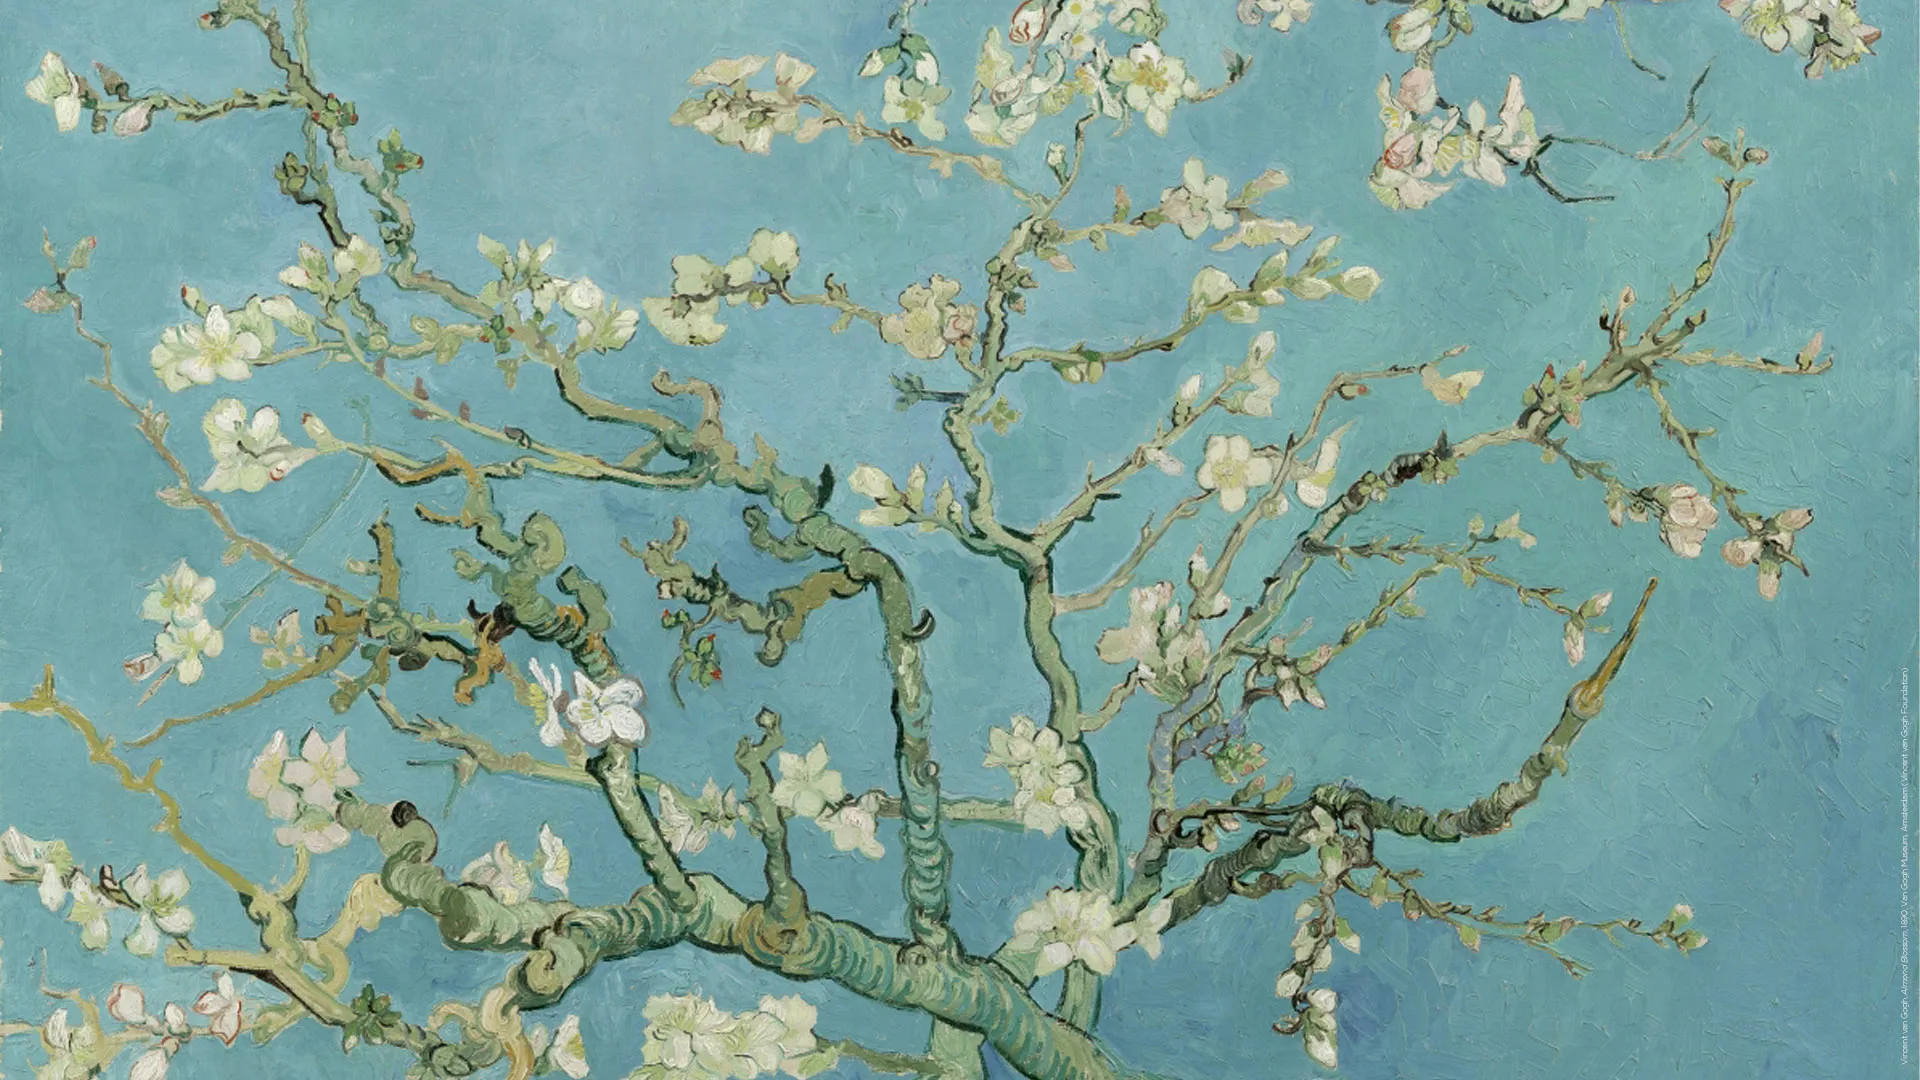 Vincent van Gogh, Almond Blossom, February 1890, oil on canvas 73.3 x 92.4 cm - Van Gogh Museum, Amsterdam (Vincent van Gogh Foundation) - © Van Gogh Museum®